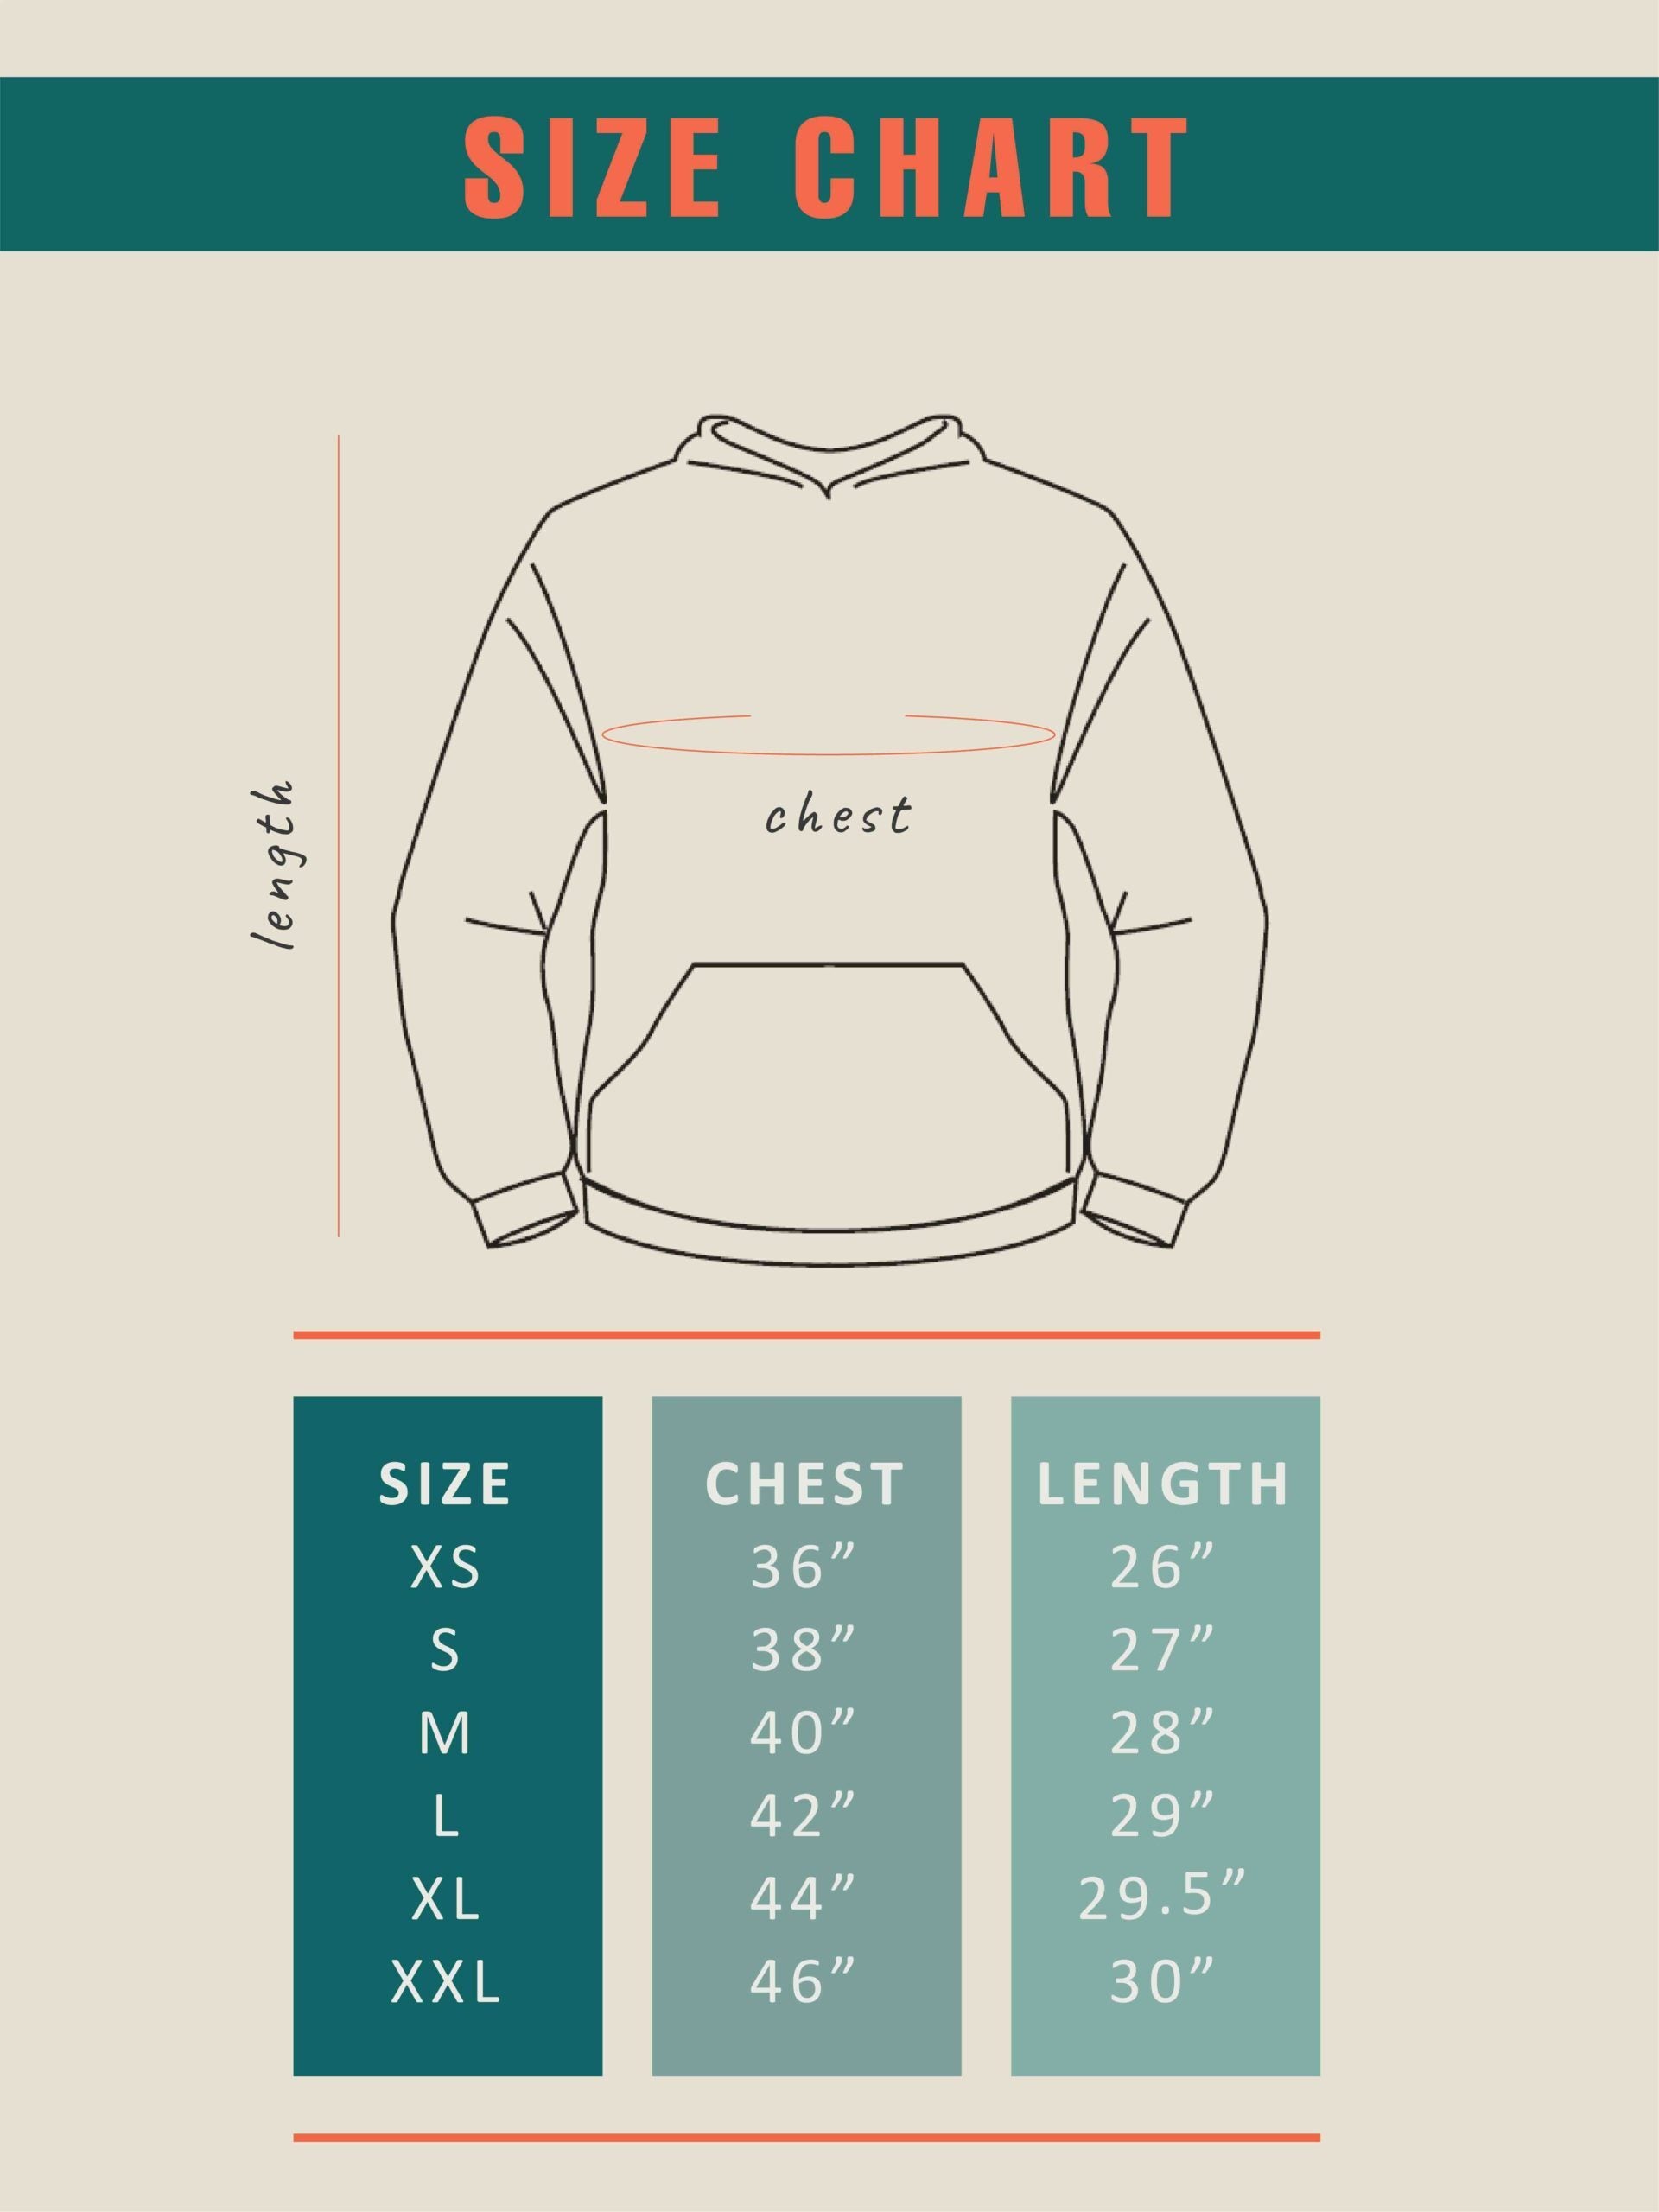 Size chart of plain hoodies by shopghumakkad